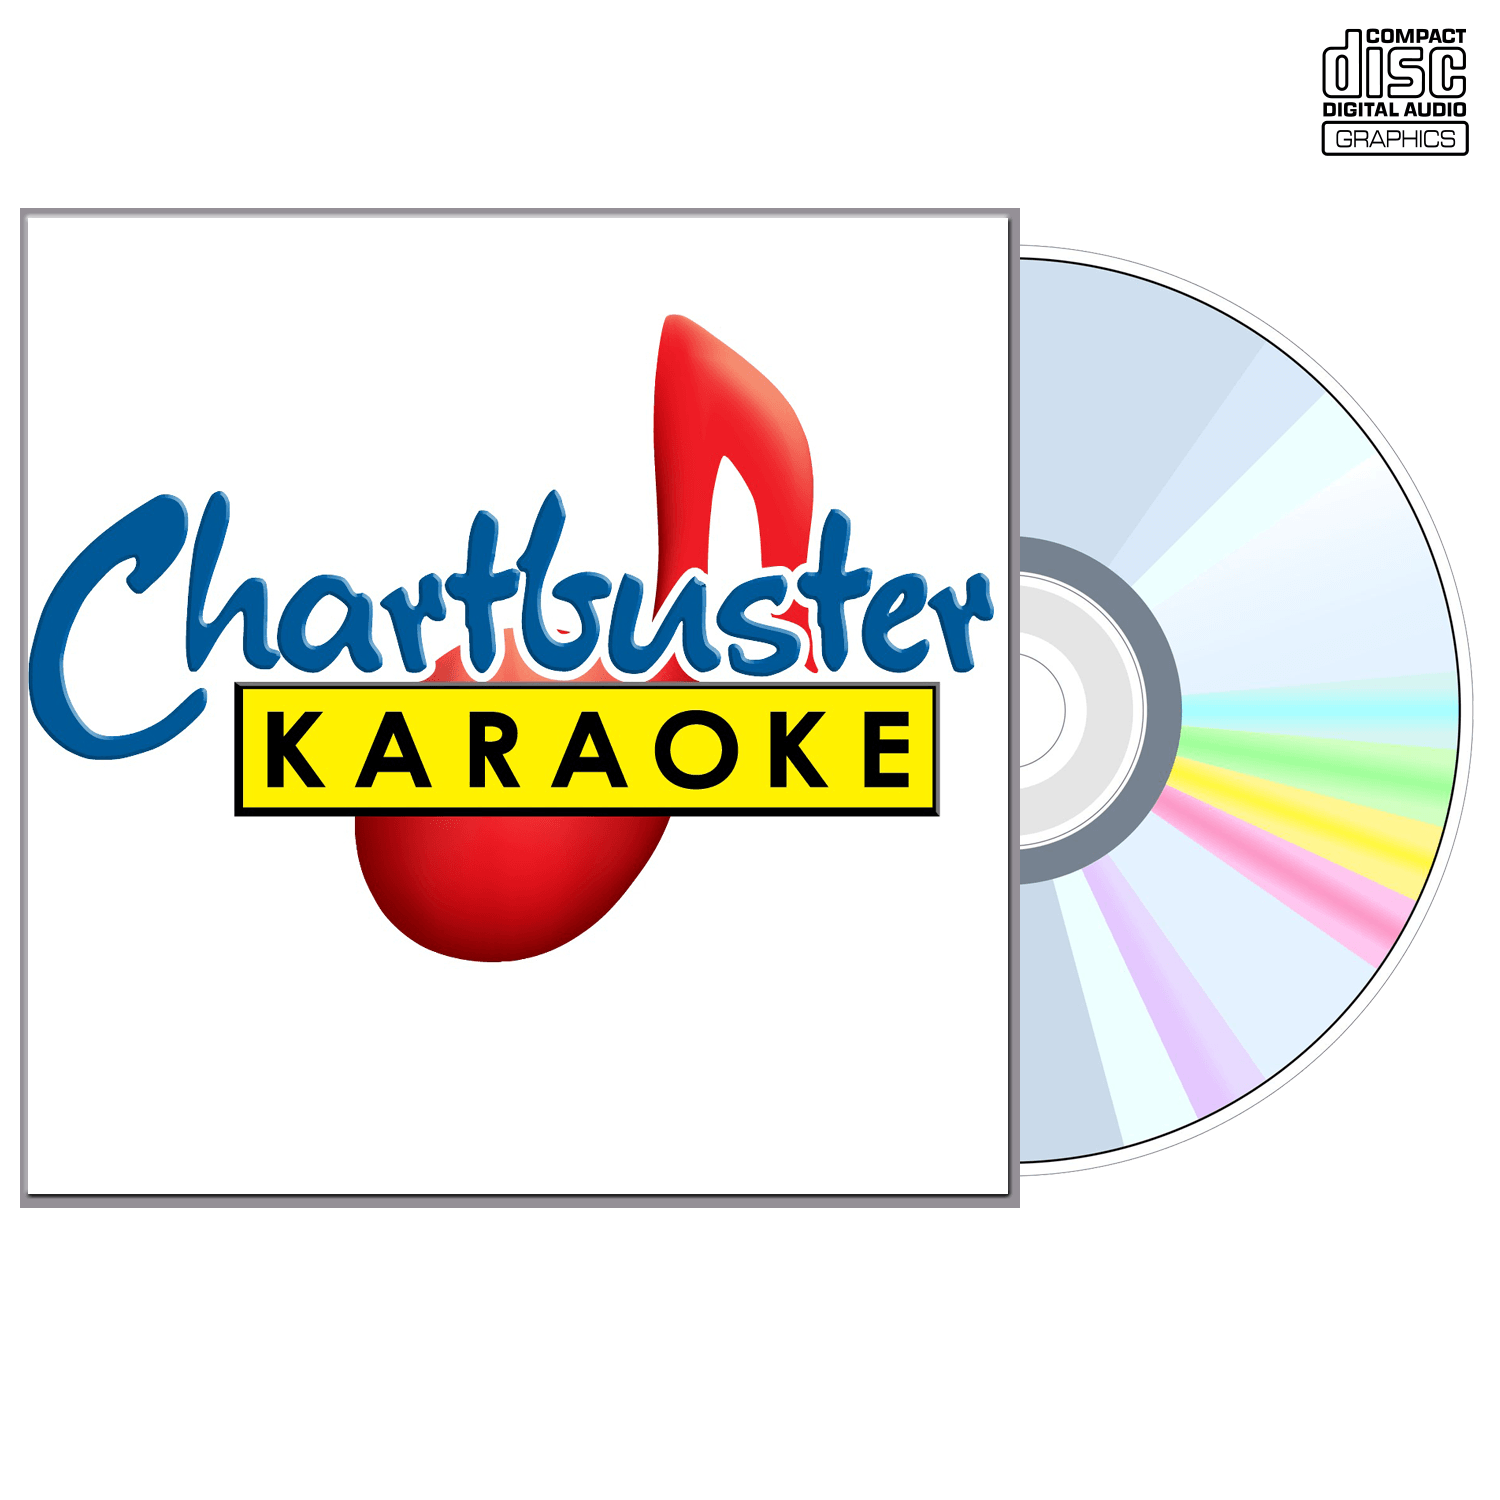 Deryl Dodd - CD+G - Chartbuster Karaoke - Karaoke Home Entertainment